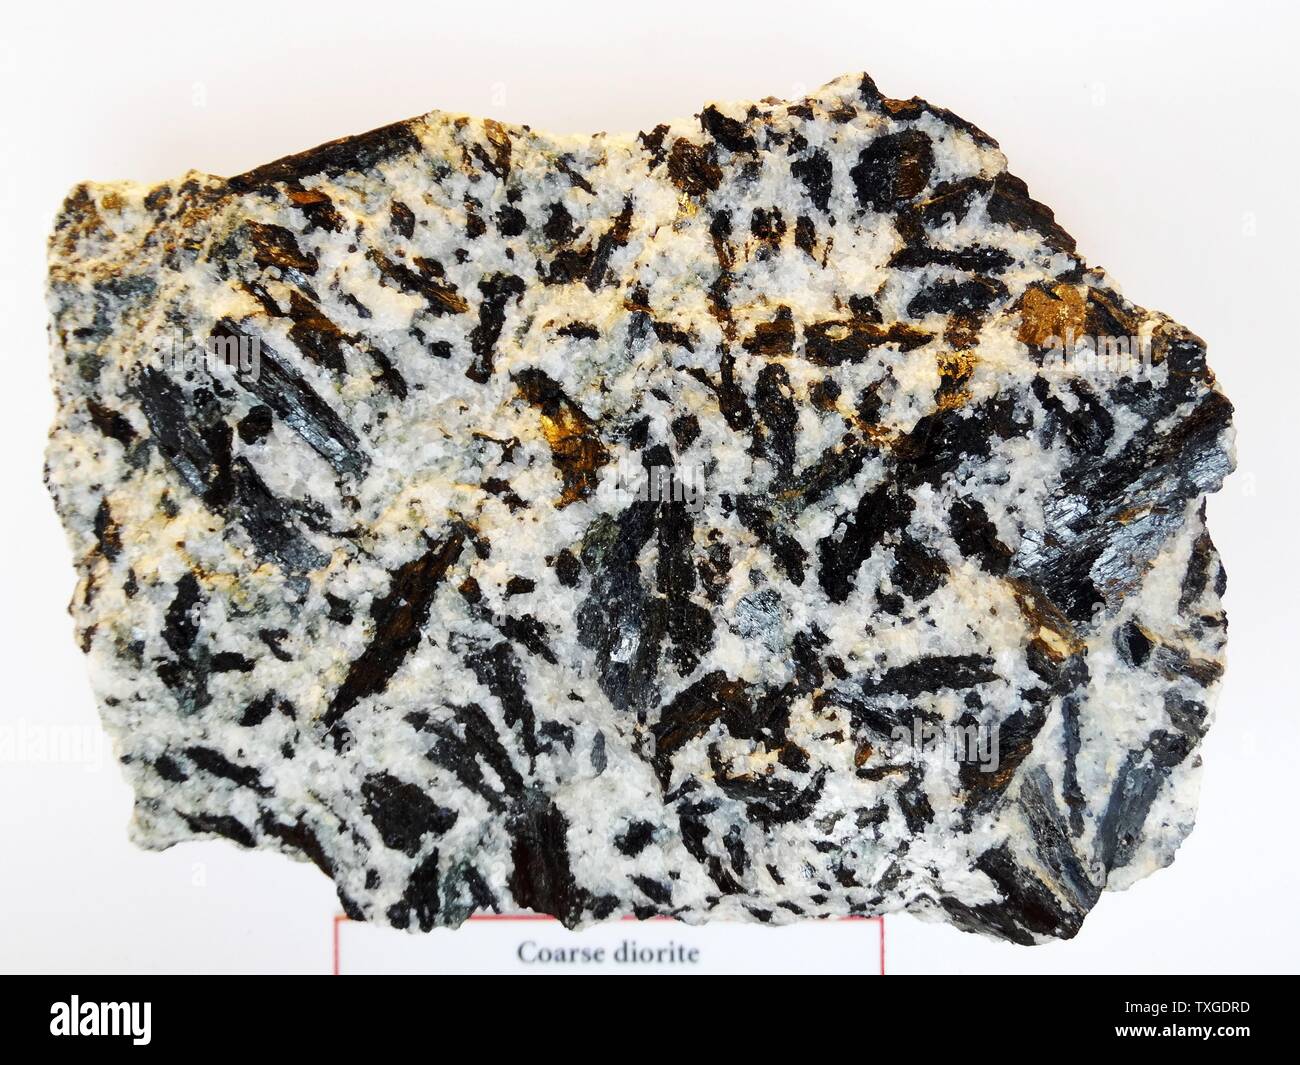 Coarse Diorite from Lochnagar, Aberdeenshire. Diorite is an intrusive igneous rock that contains a mixture of feldspar, pyroxene, hornblende and sometimes quartz. Stock Photo